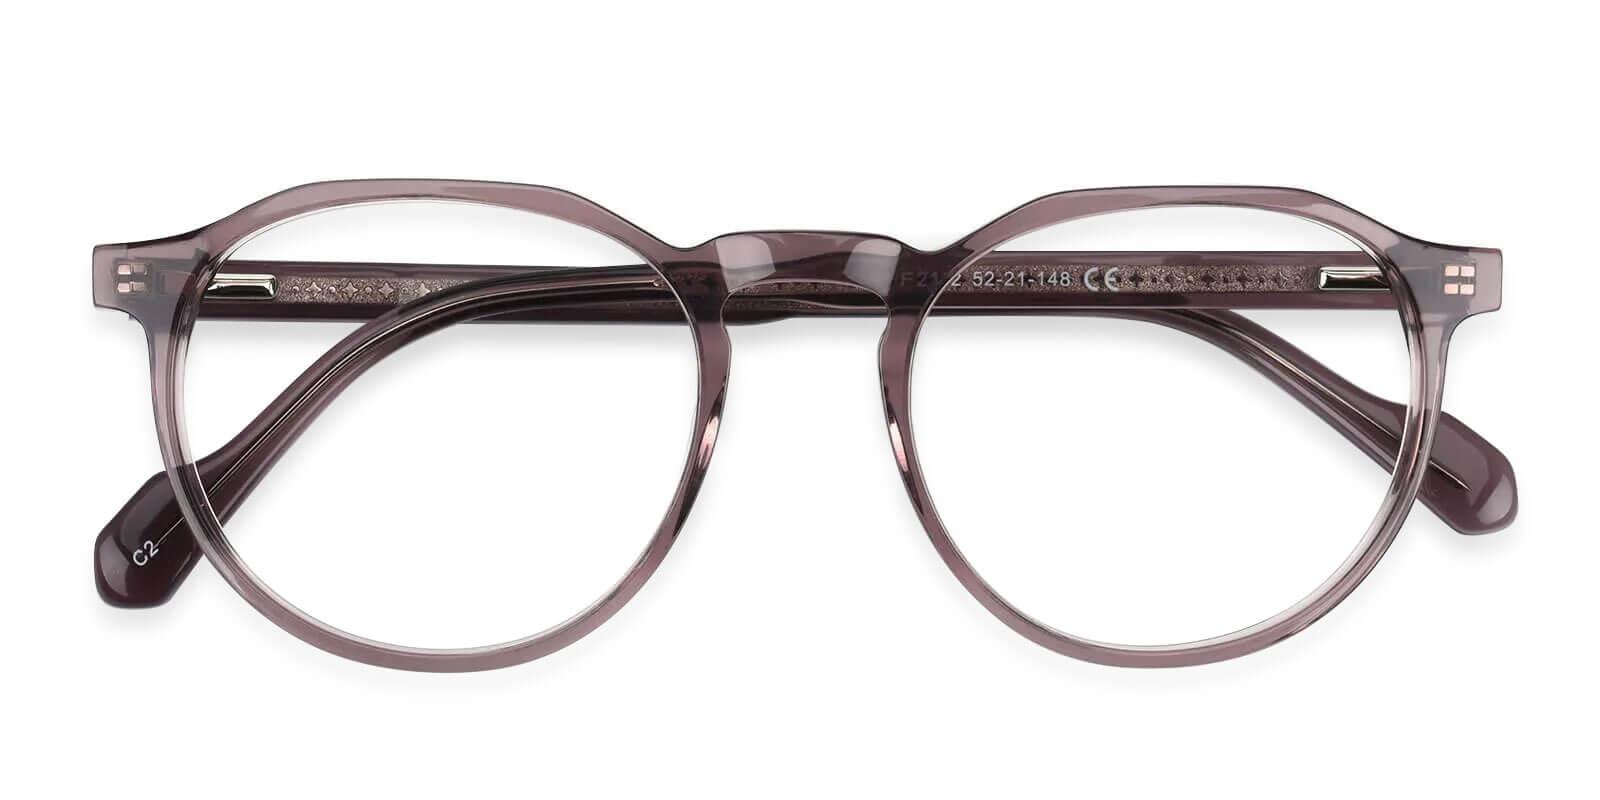 Carnival Purple Acetate Eyeglasses , SpringHinges , UniversalBridgeFit Frames from ABBE Glasses